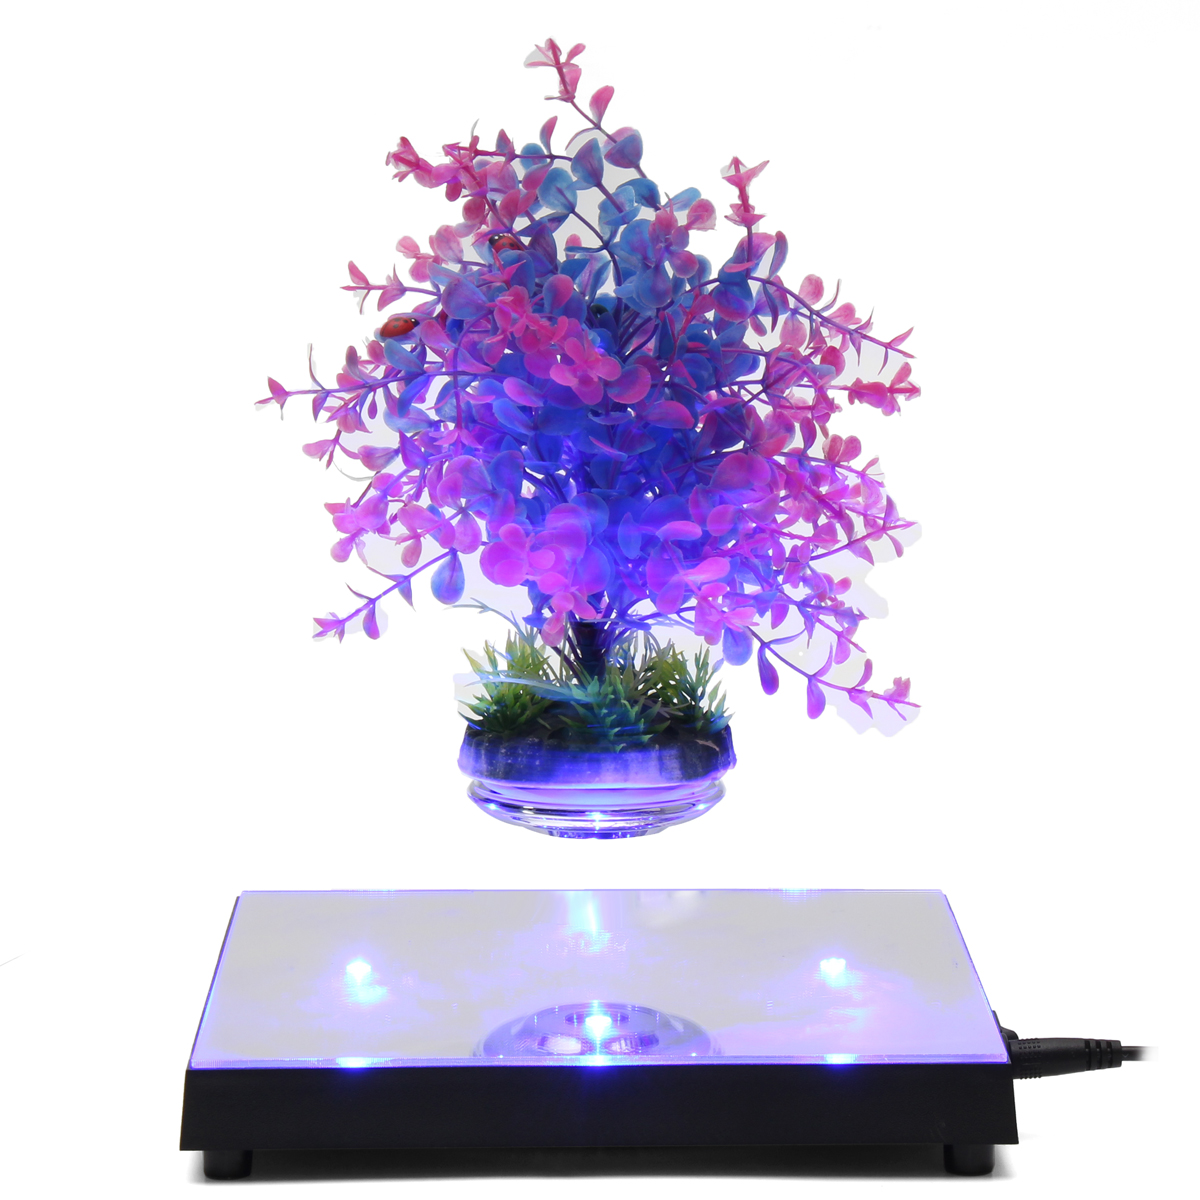 

Magnetic Levitation LED Display Platform 350g Floating Rotating Jewelry Show Stand Holder Gift